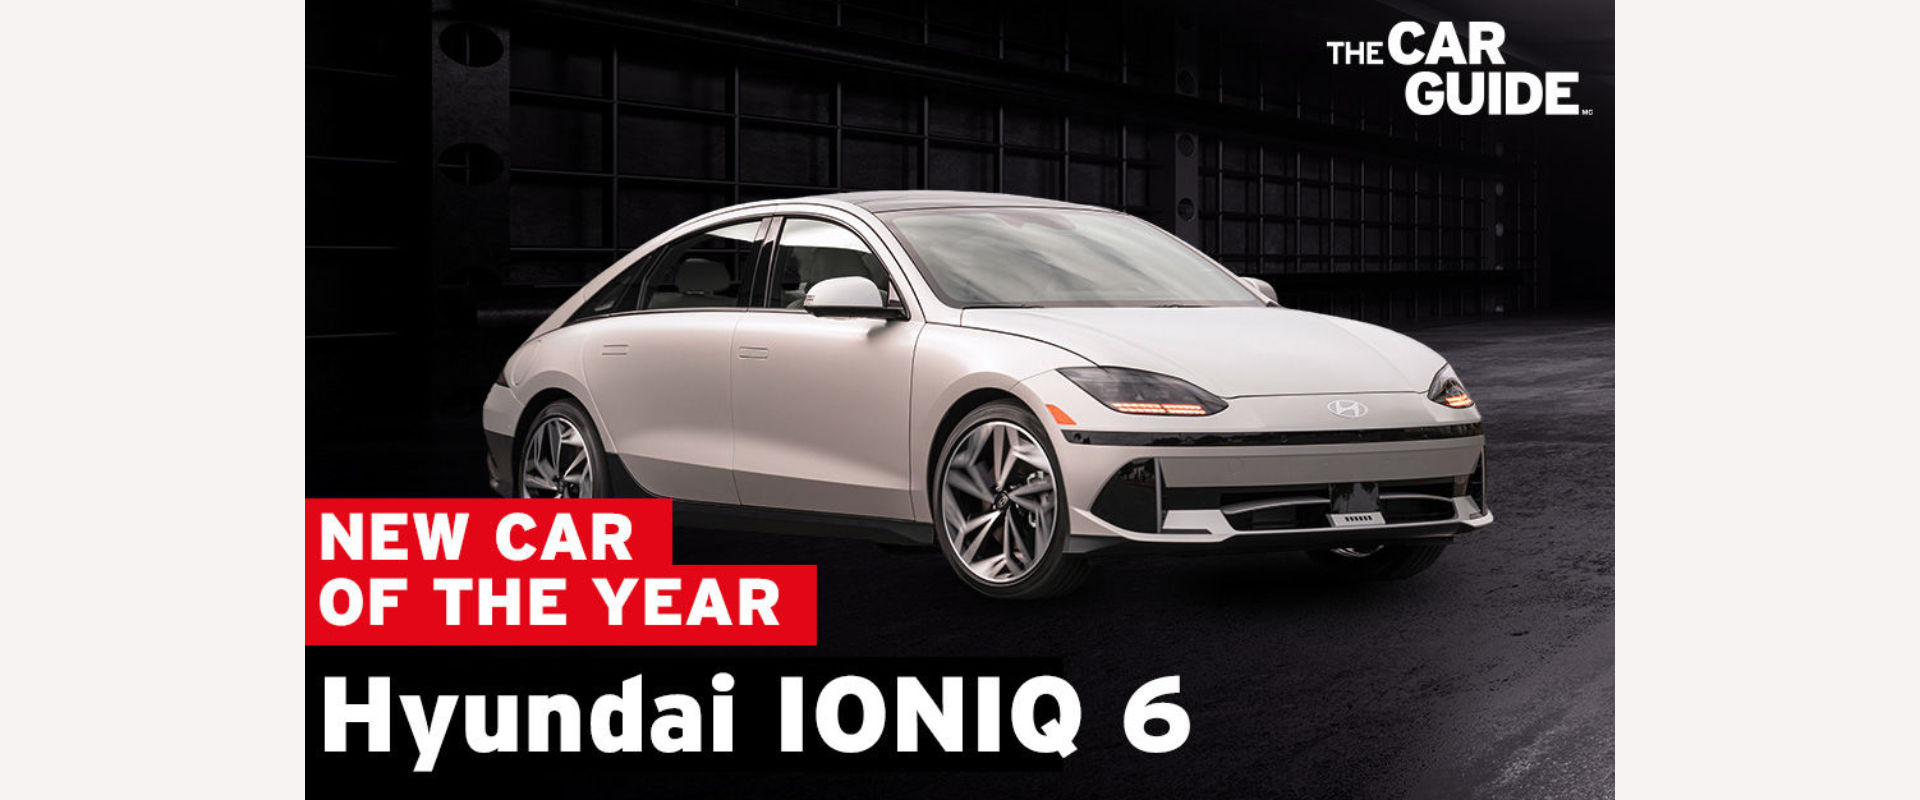 Hyundai IONIQ 6 named “New Car of the Year” by Le Guide de l’auto